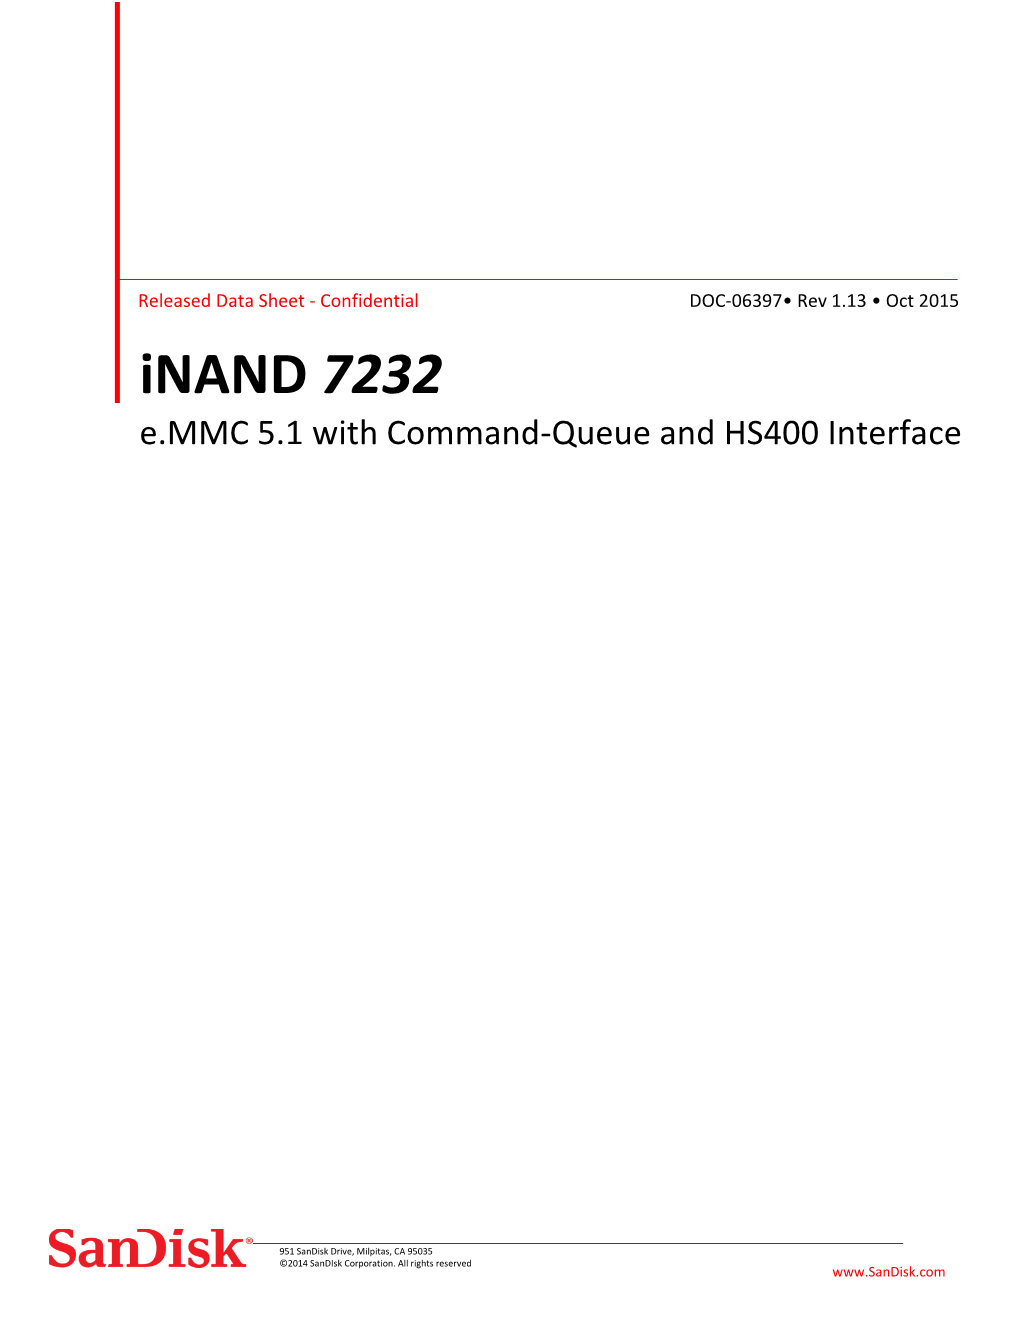 Sandisk Inand Extreme Emmc 5.0 HS400 Interface Data Sheet